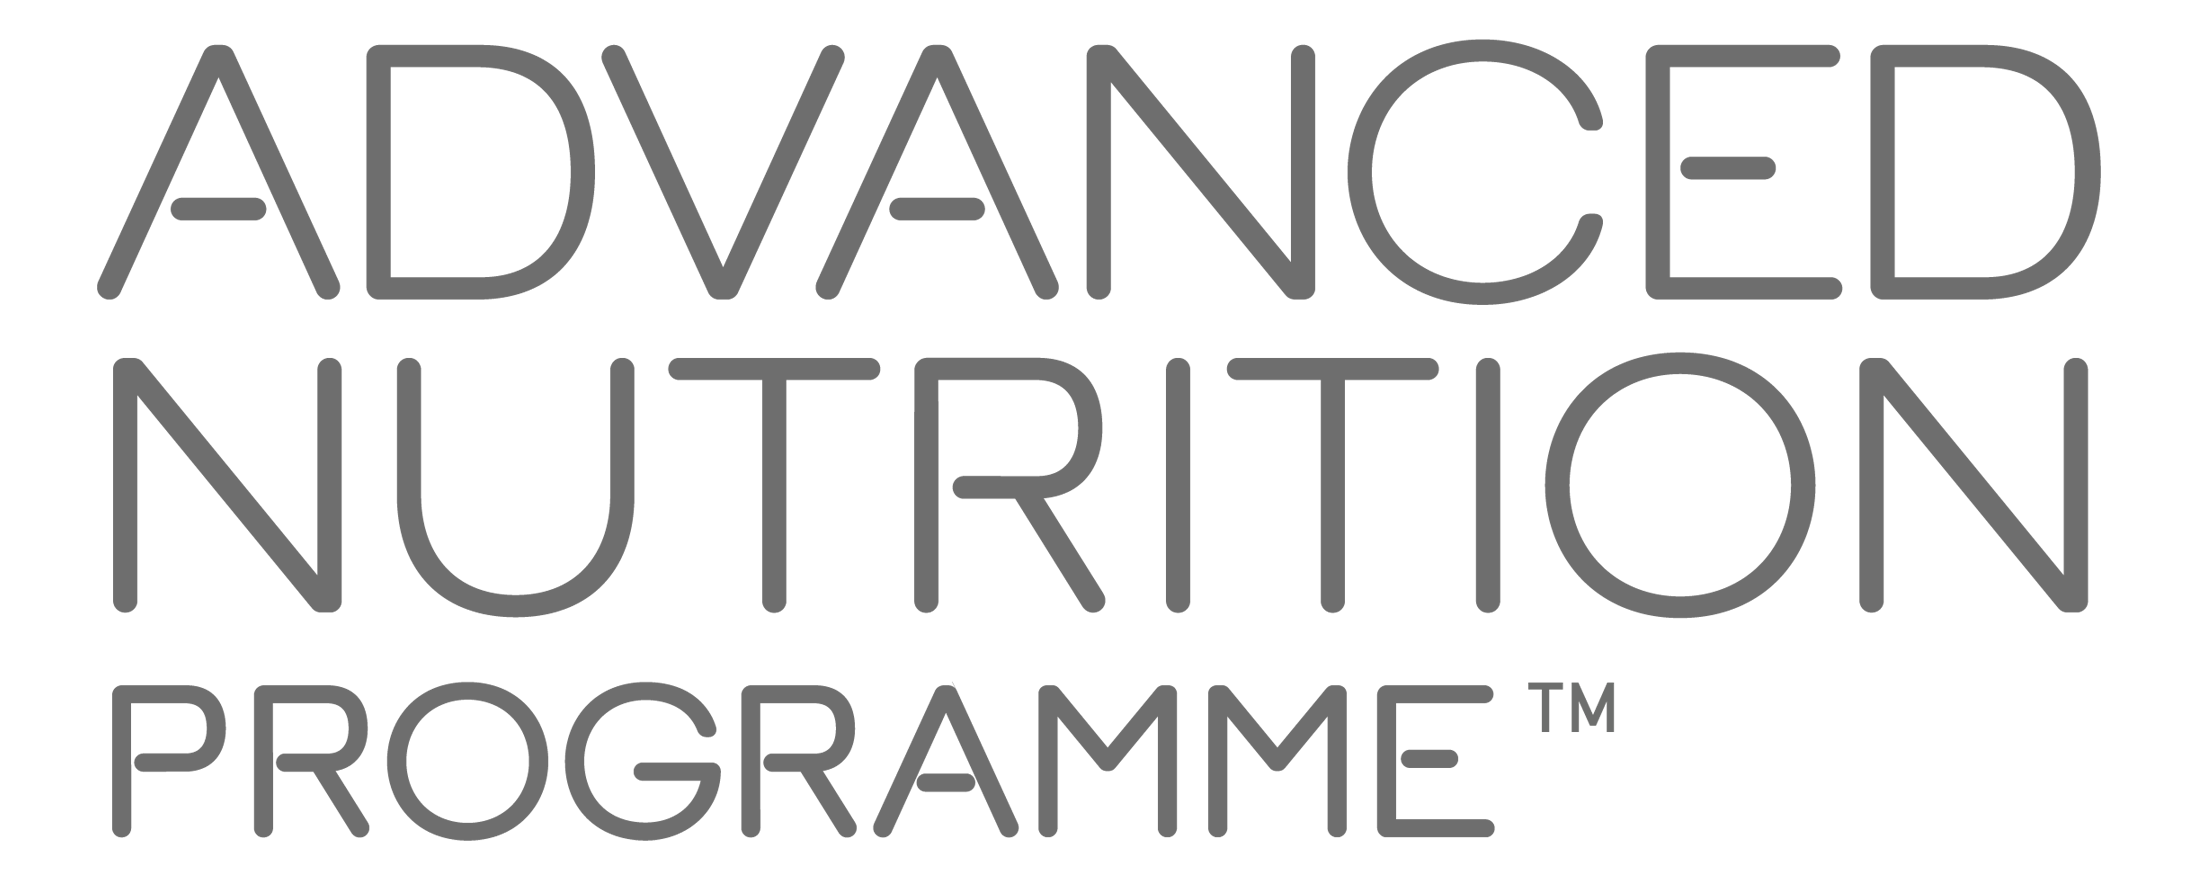 Advanced Nutrition Programme Header